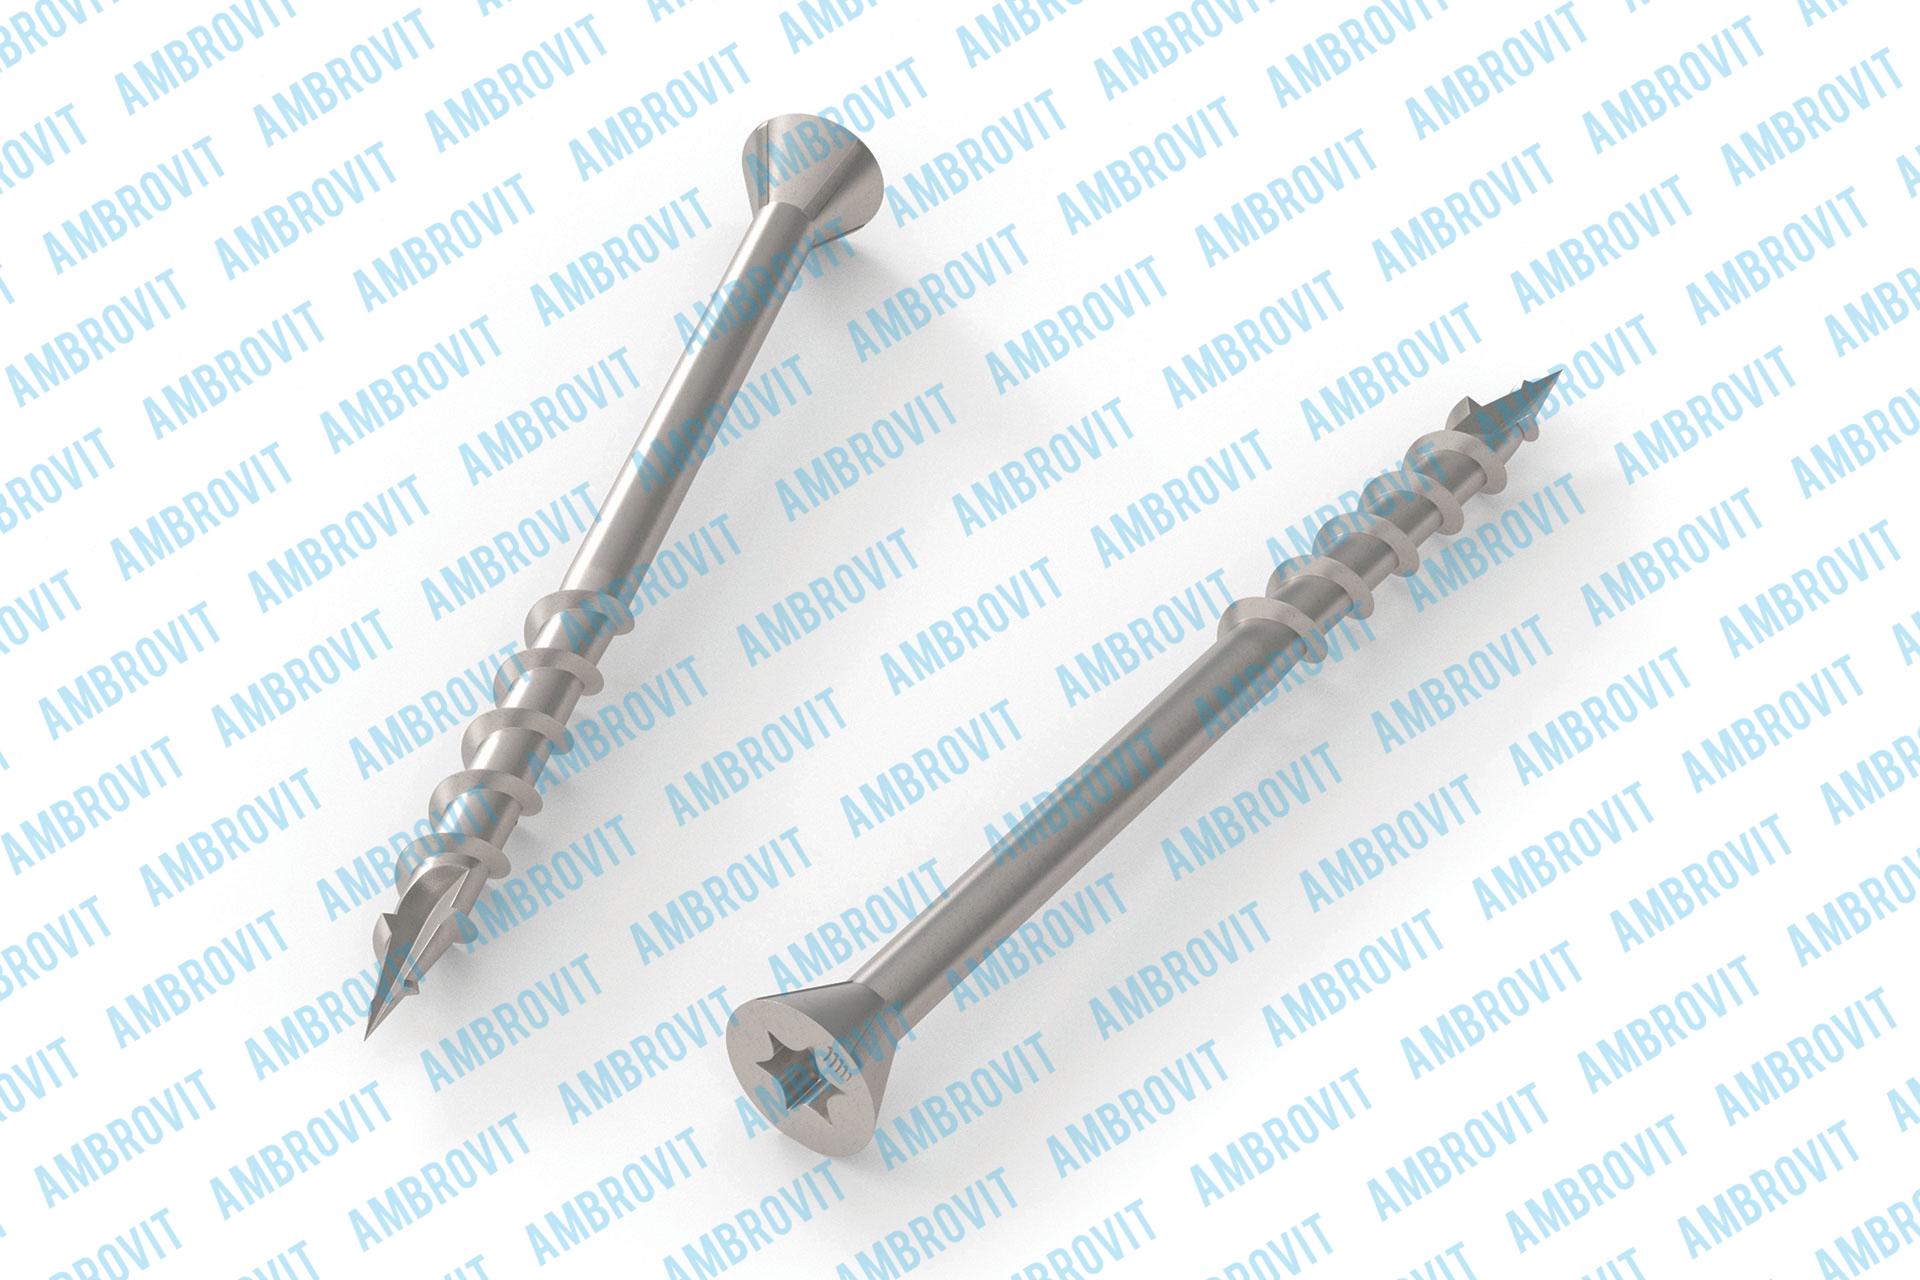 Stainless steel wood terrace screws tx small flat head 60° w/ribs under head type 17